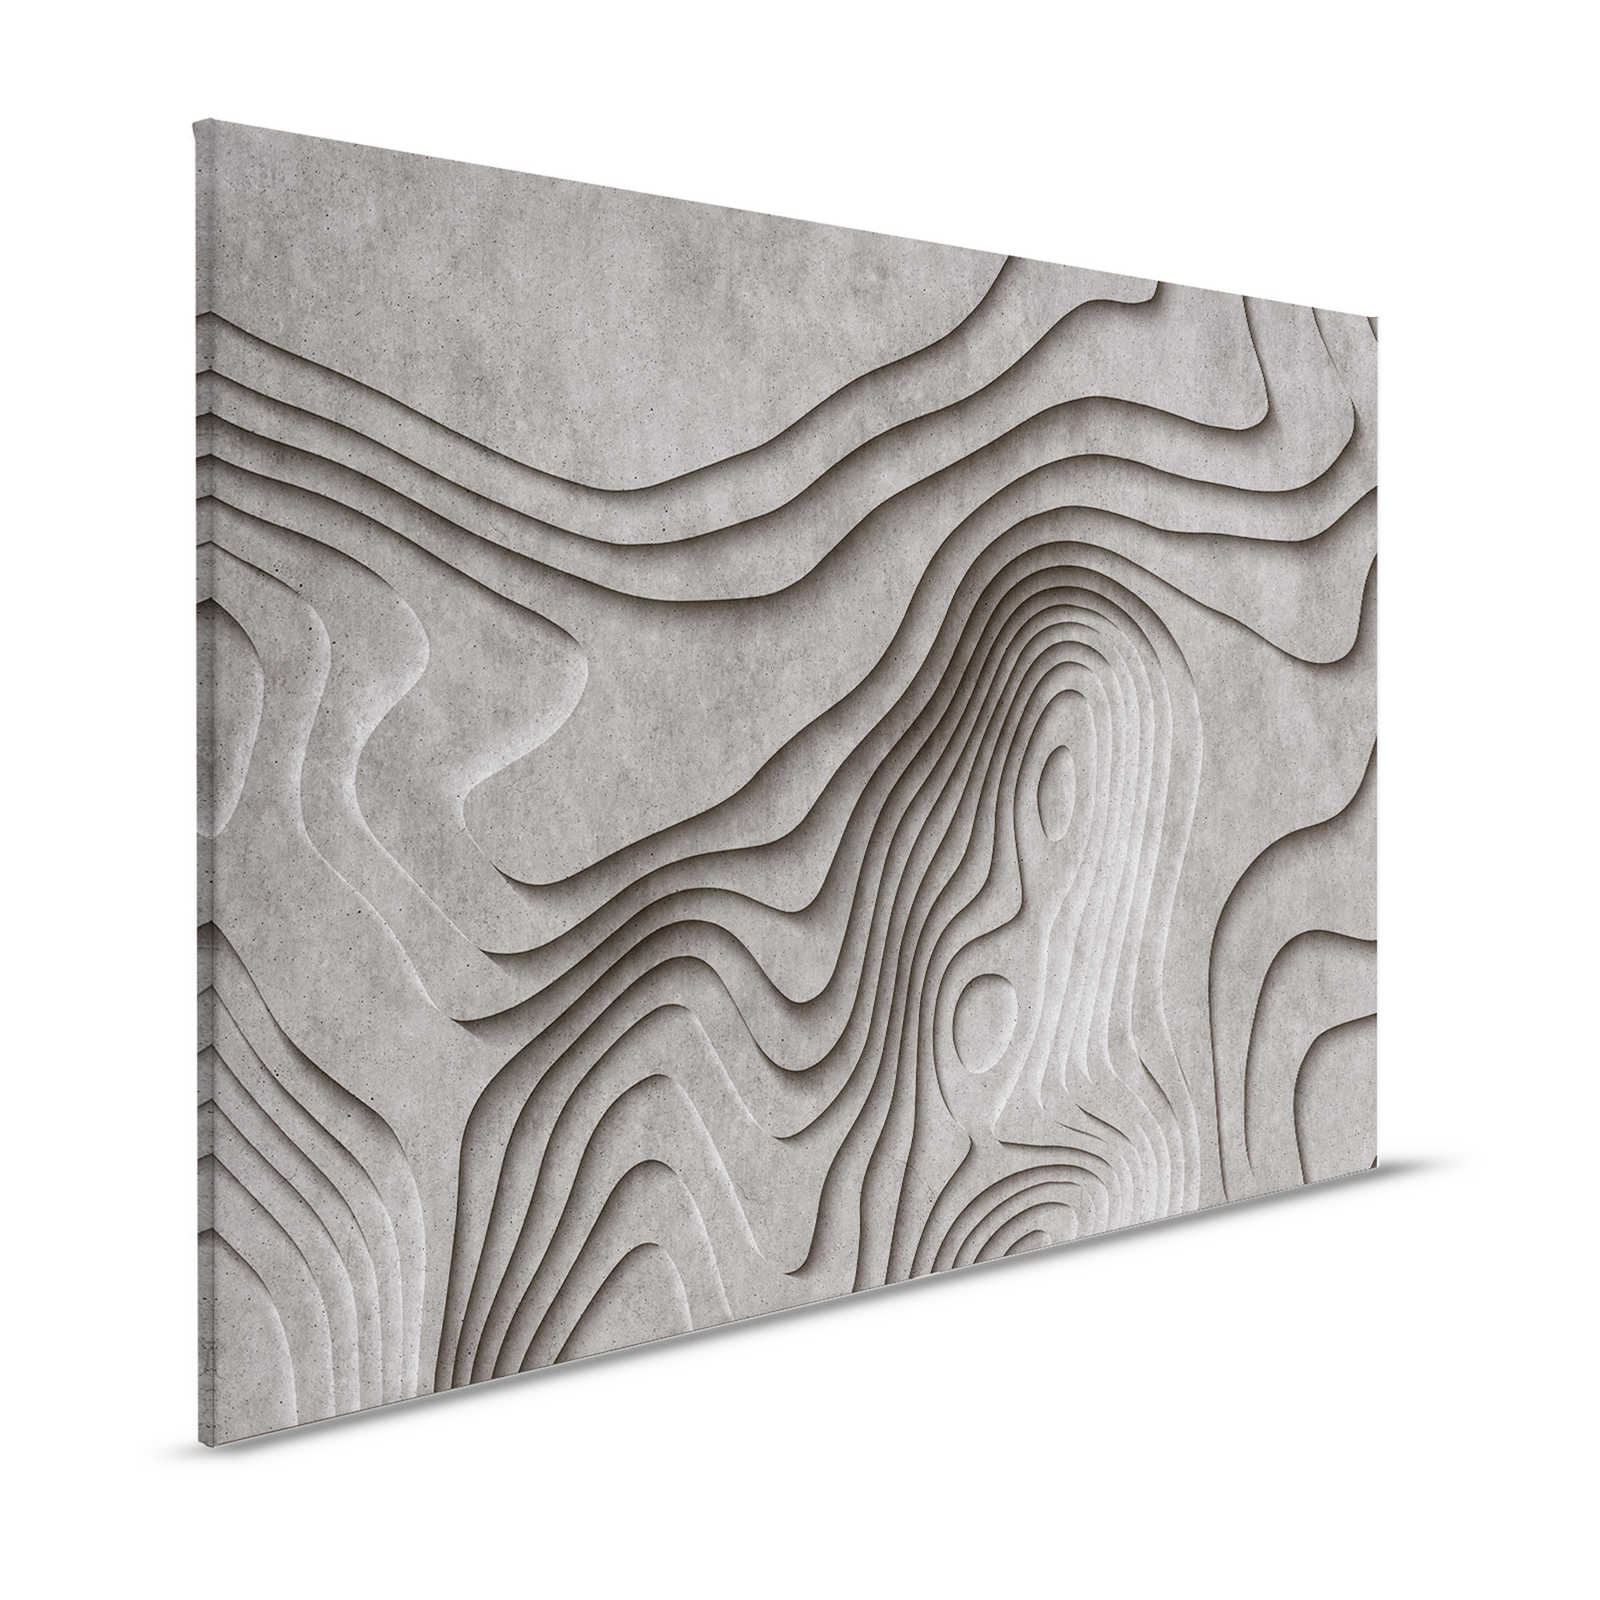 Canyon 1 - Cool 3D Concrete Canyon Canvas Painting - 1.20 m x 0.80 m
